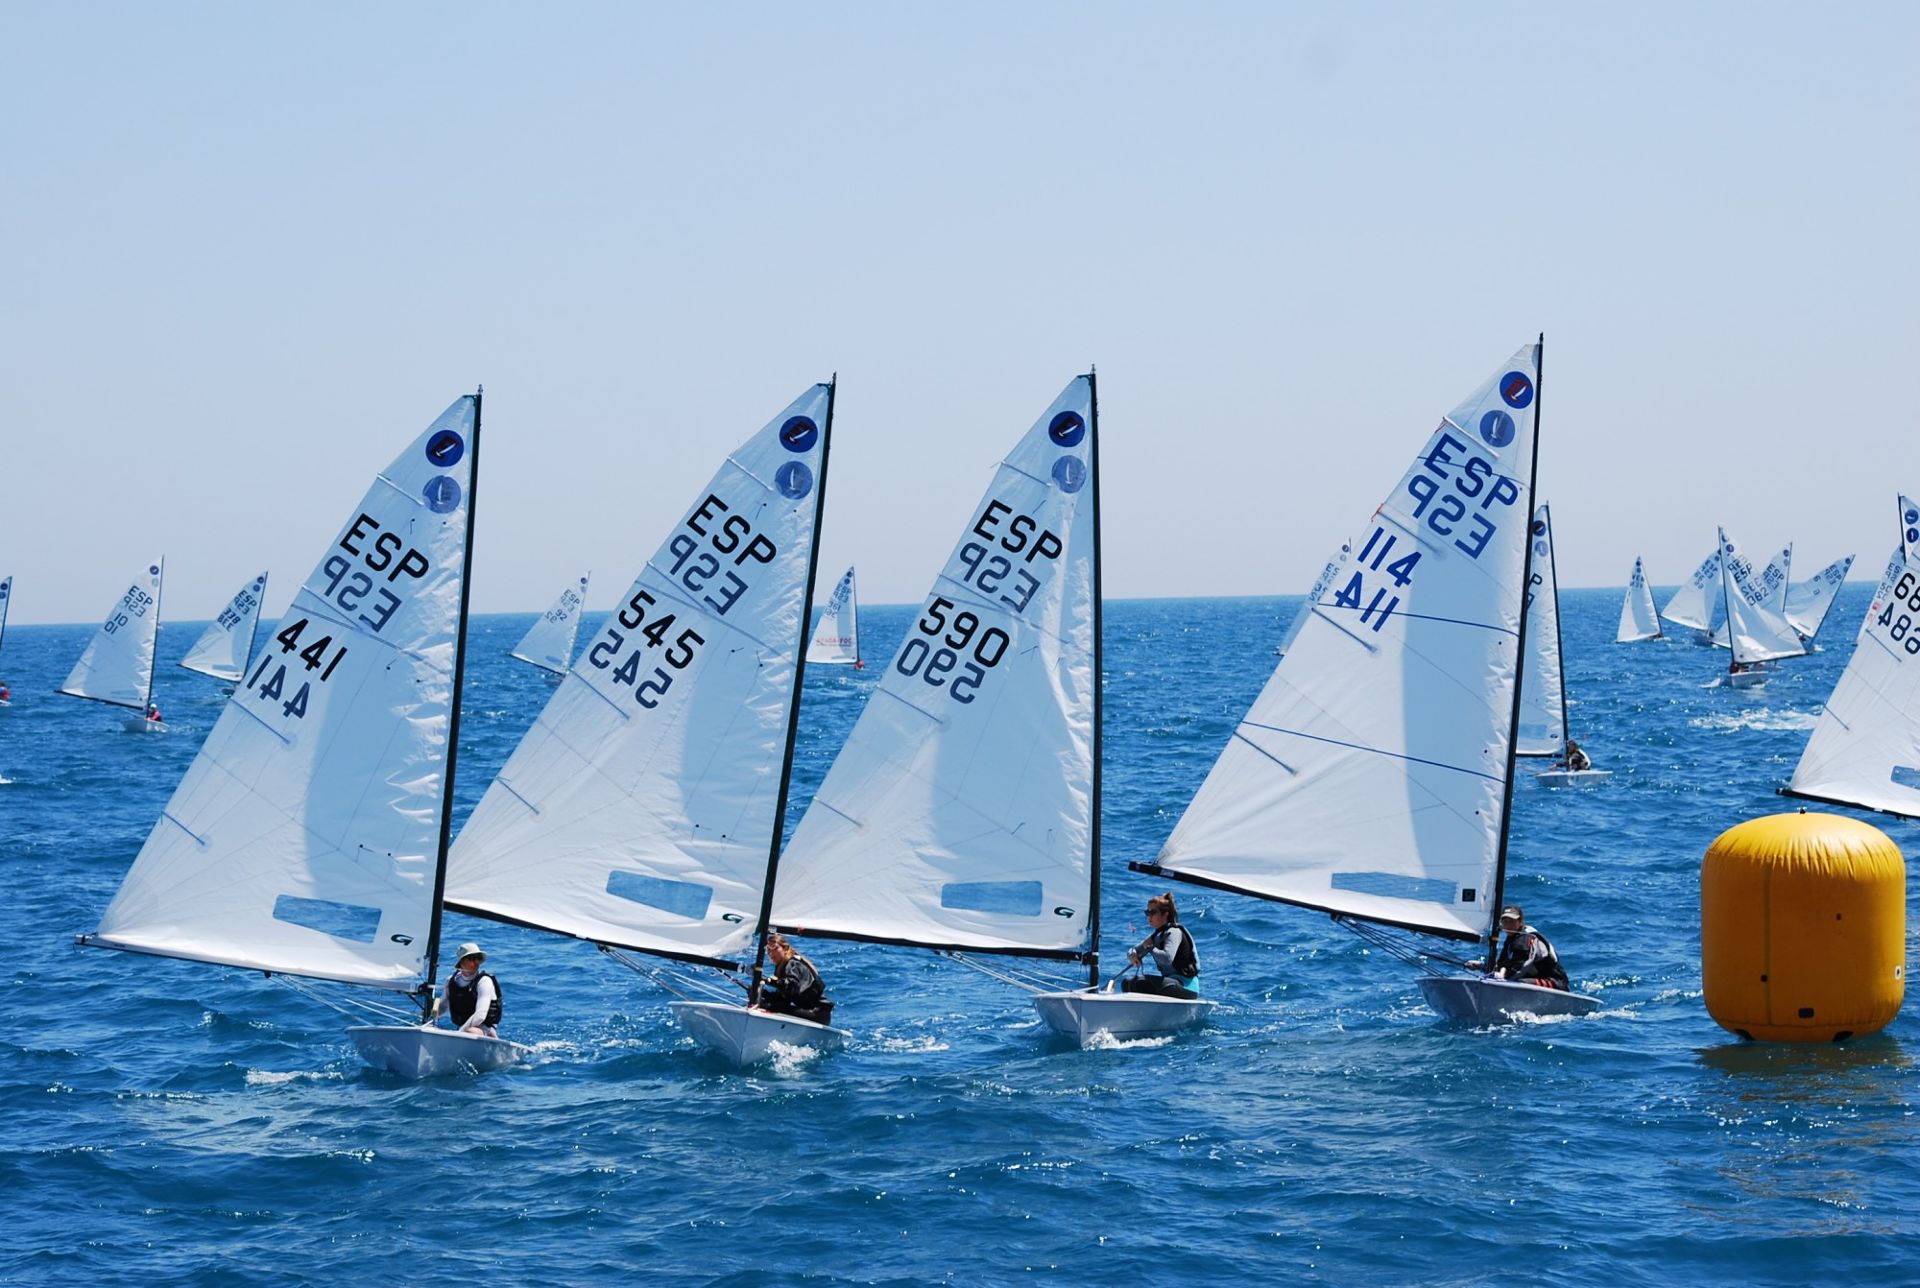 Campionat d'Espanya classe europe. CN Eivissa 2014